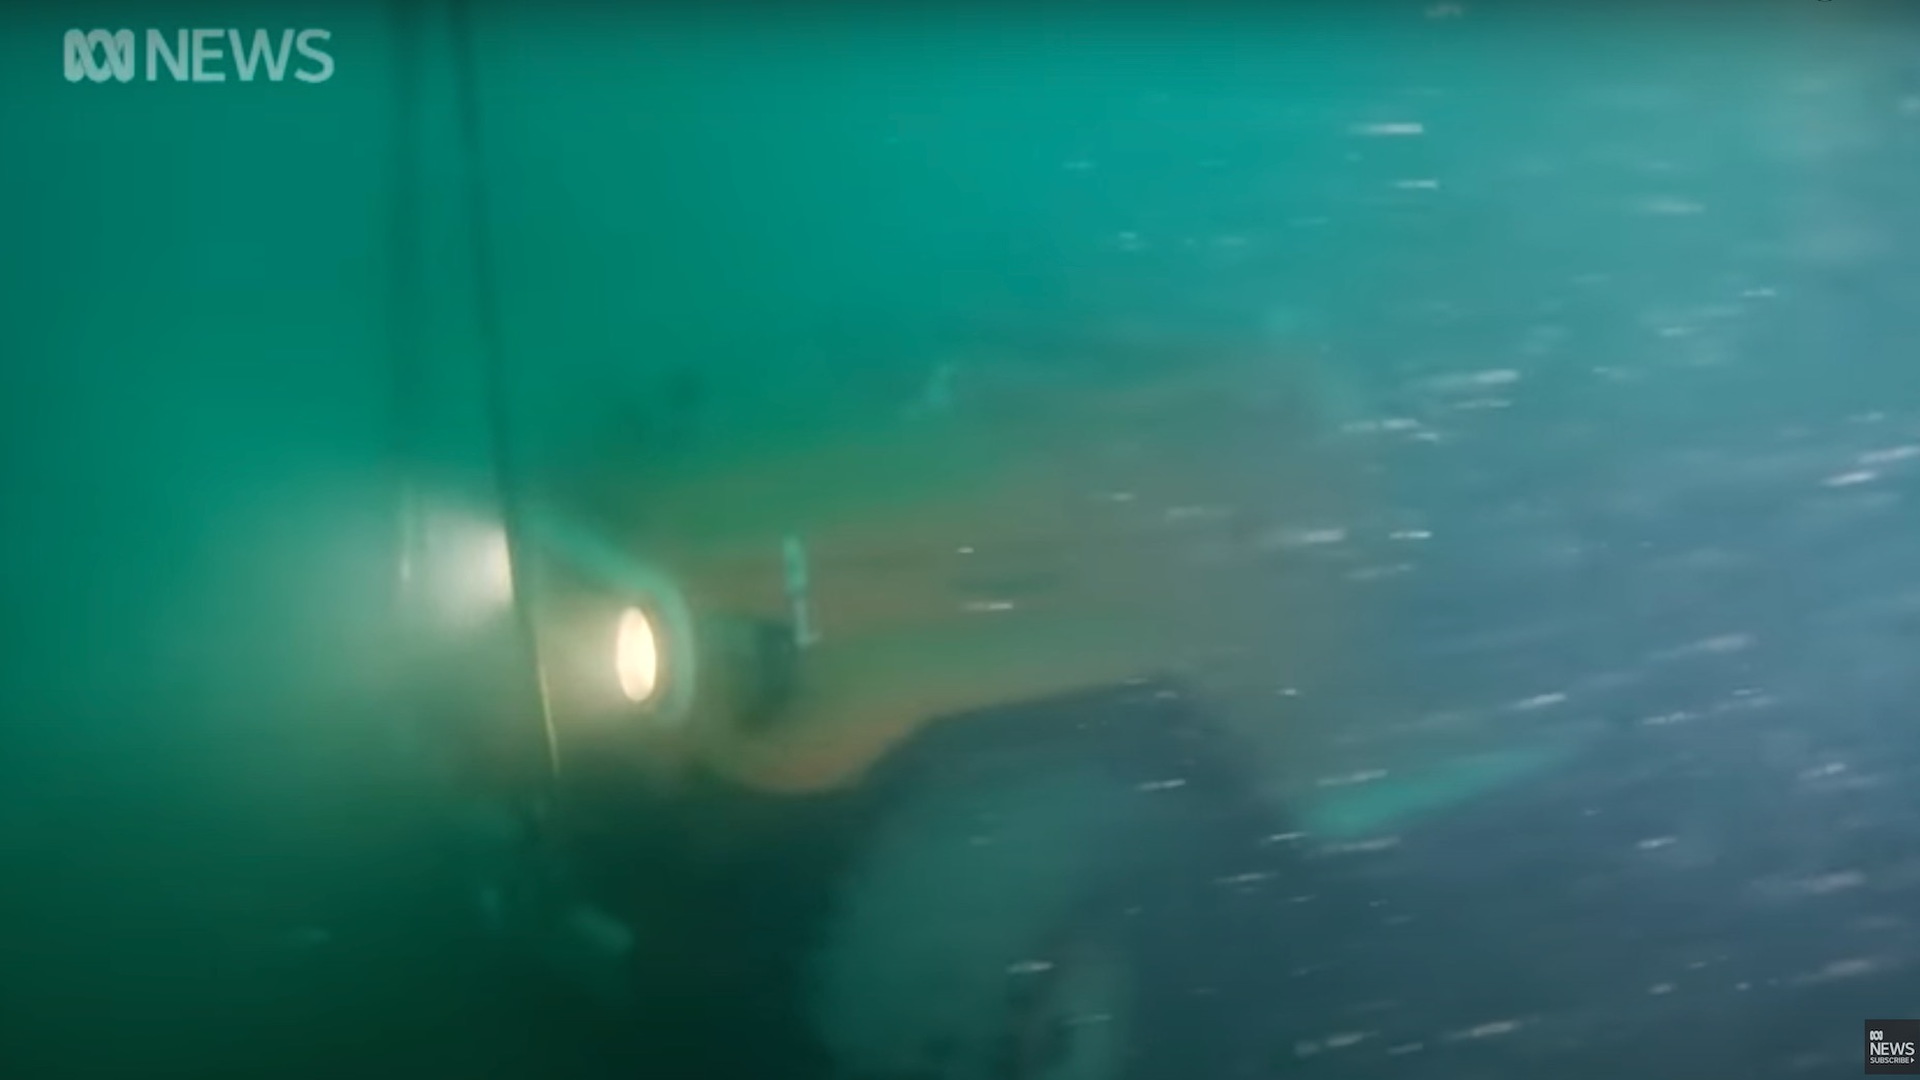 1978 Toyota Land Cruiser "Mudcrab" sets underwater driving records